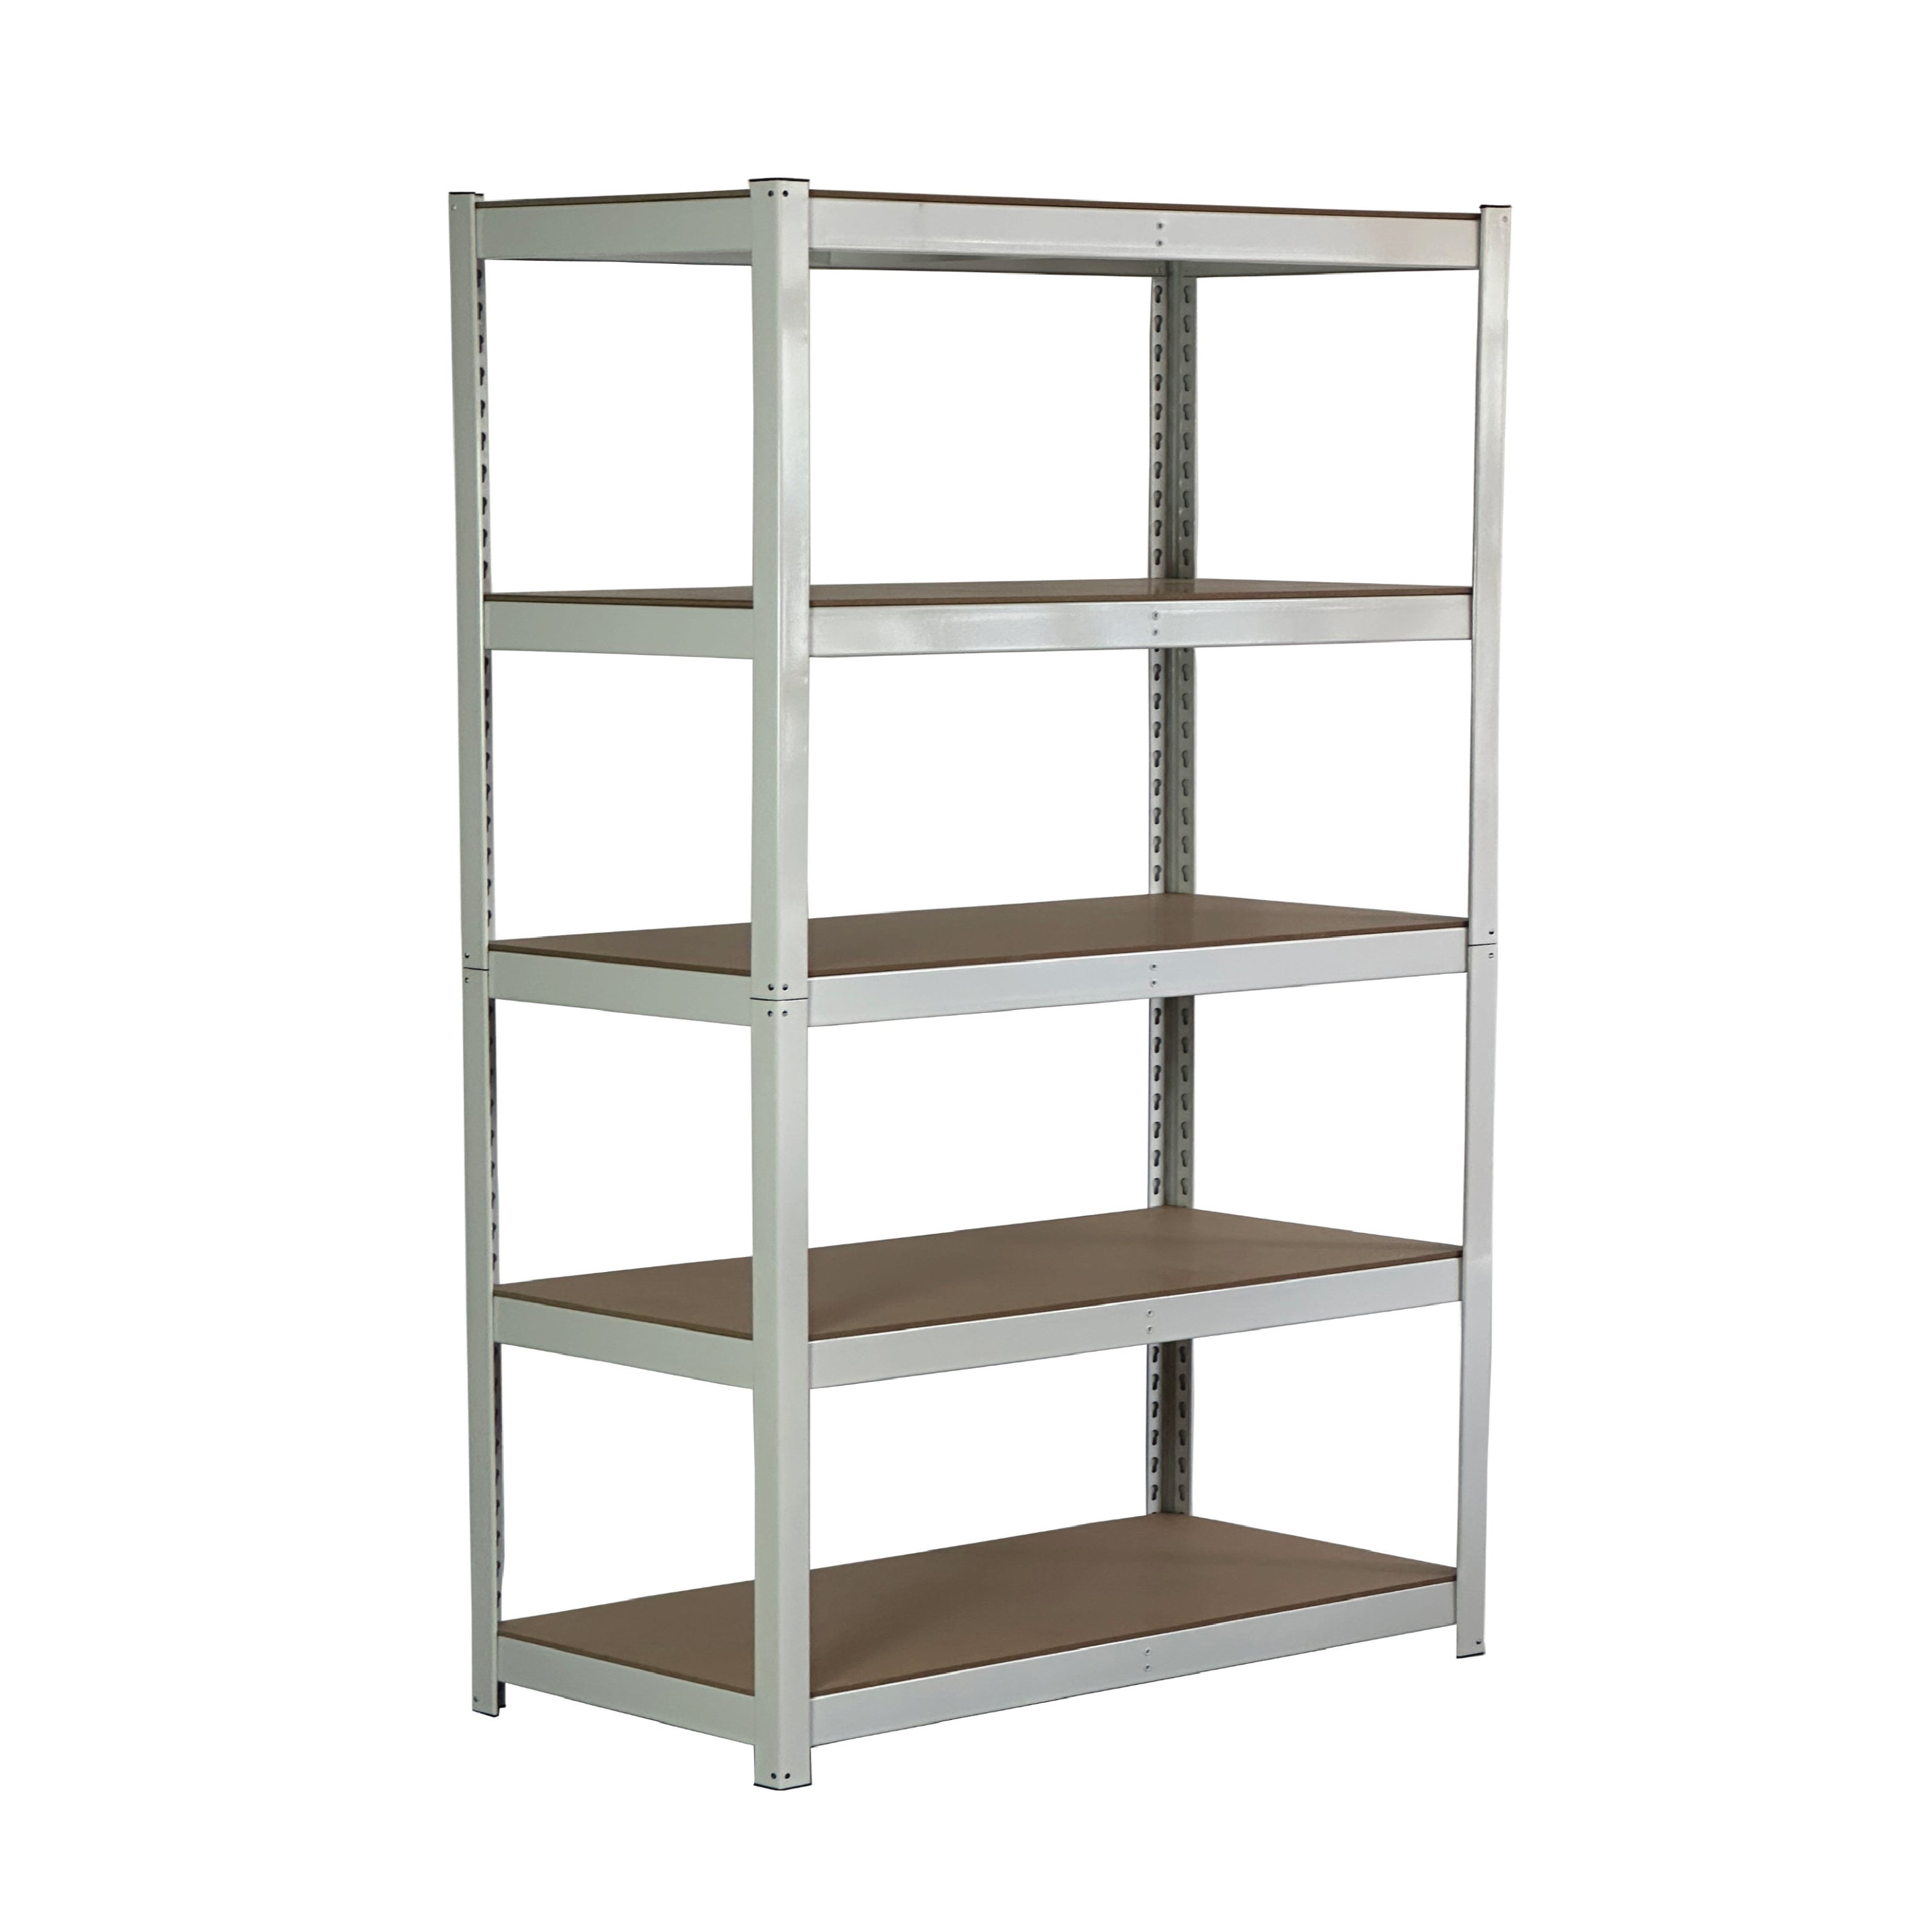 SafeRacks 18 x 48 x 72 Garage Storage Solution | Modular Shelves, Hammertone